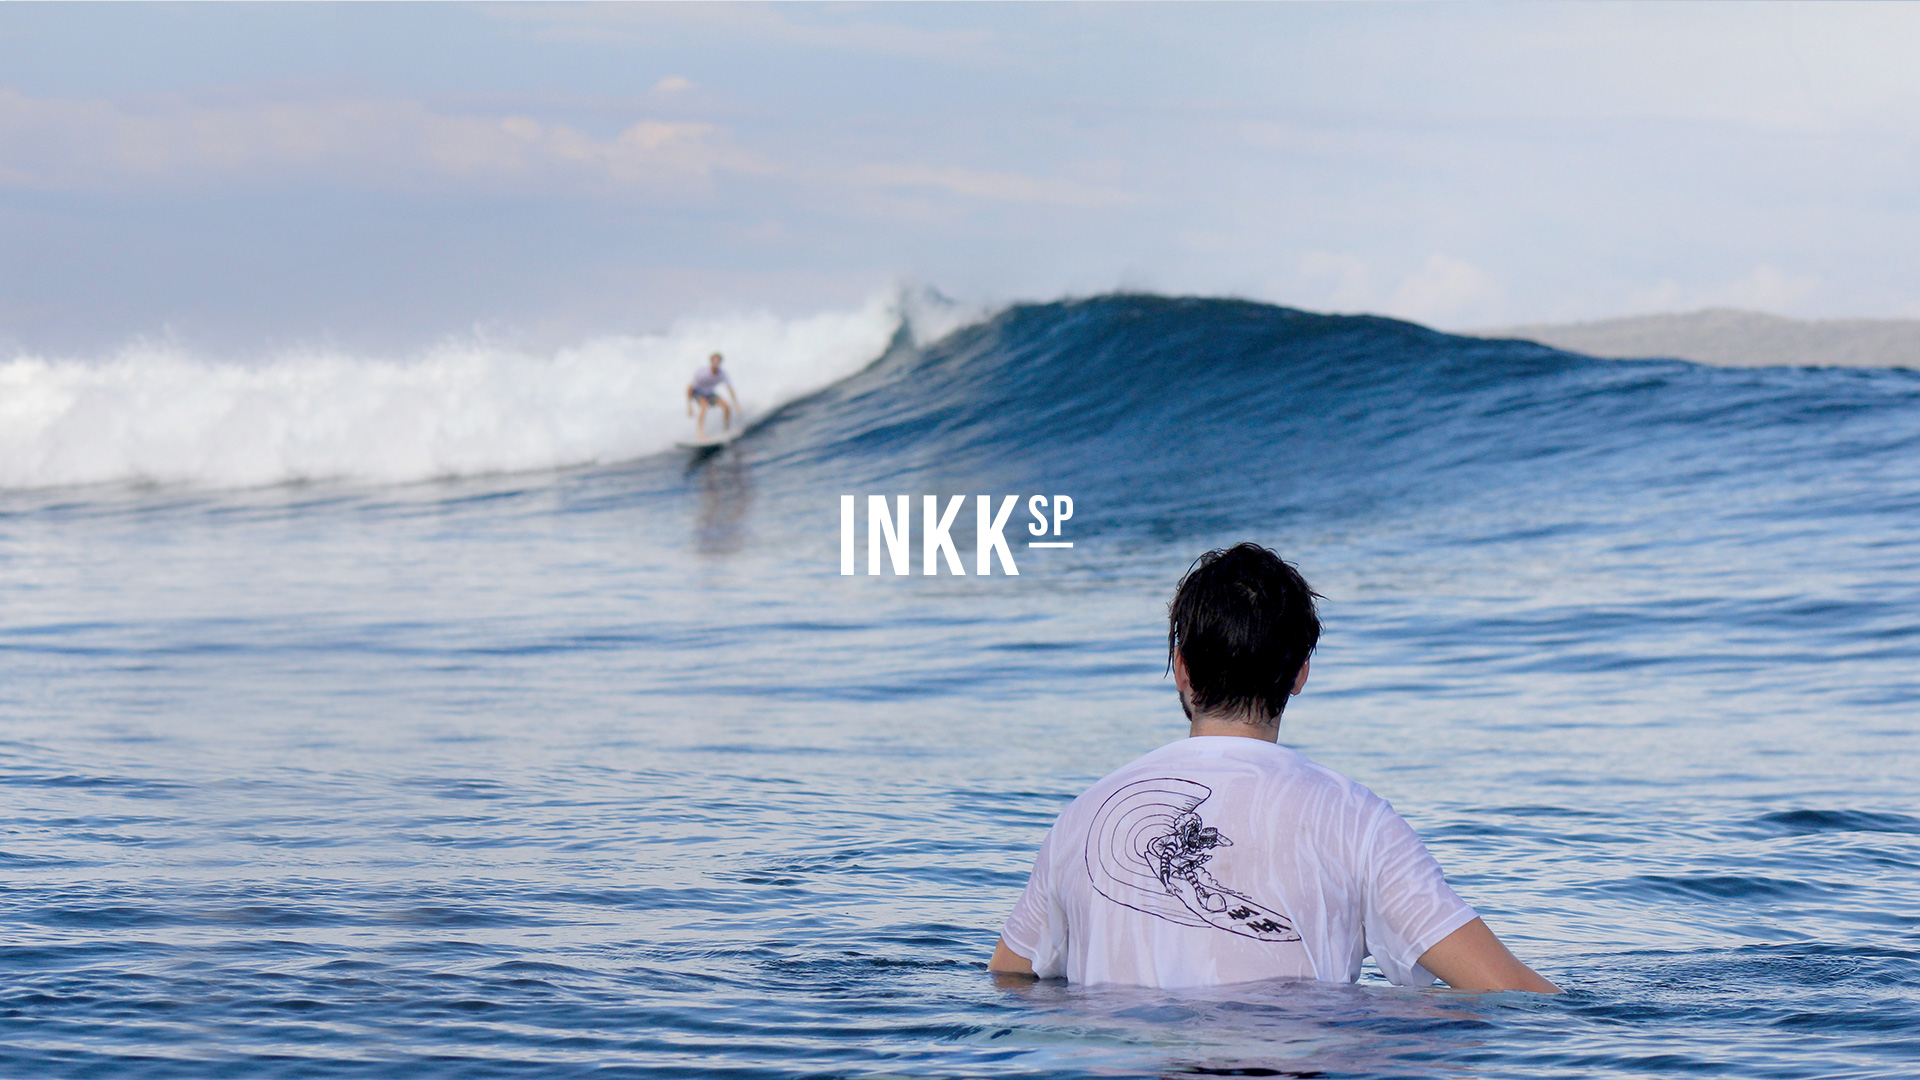 INKKsp — Logo on surfing image